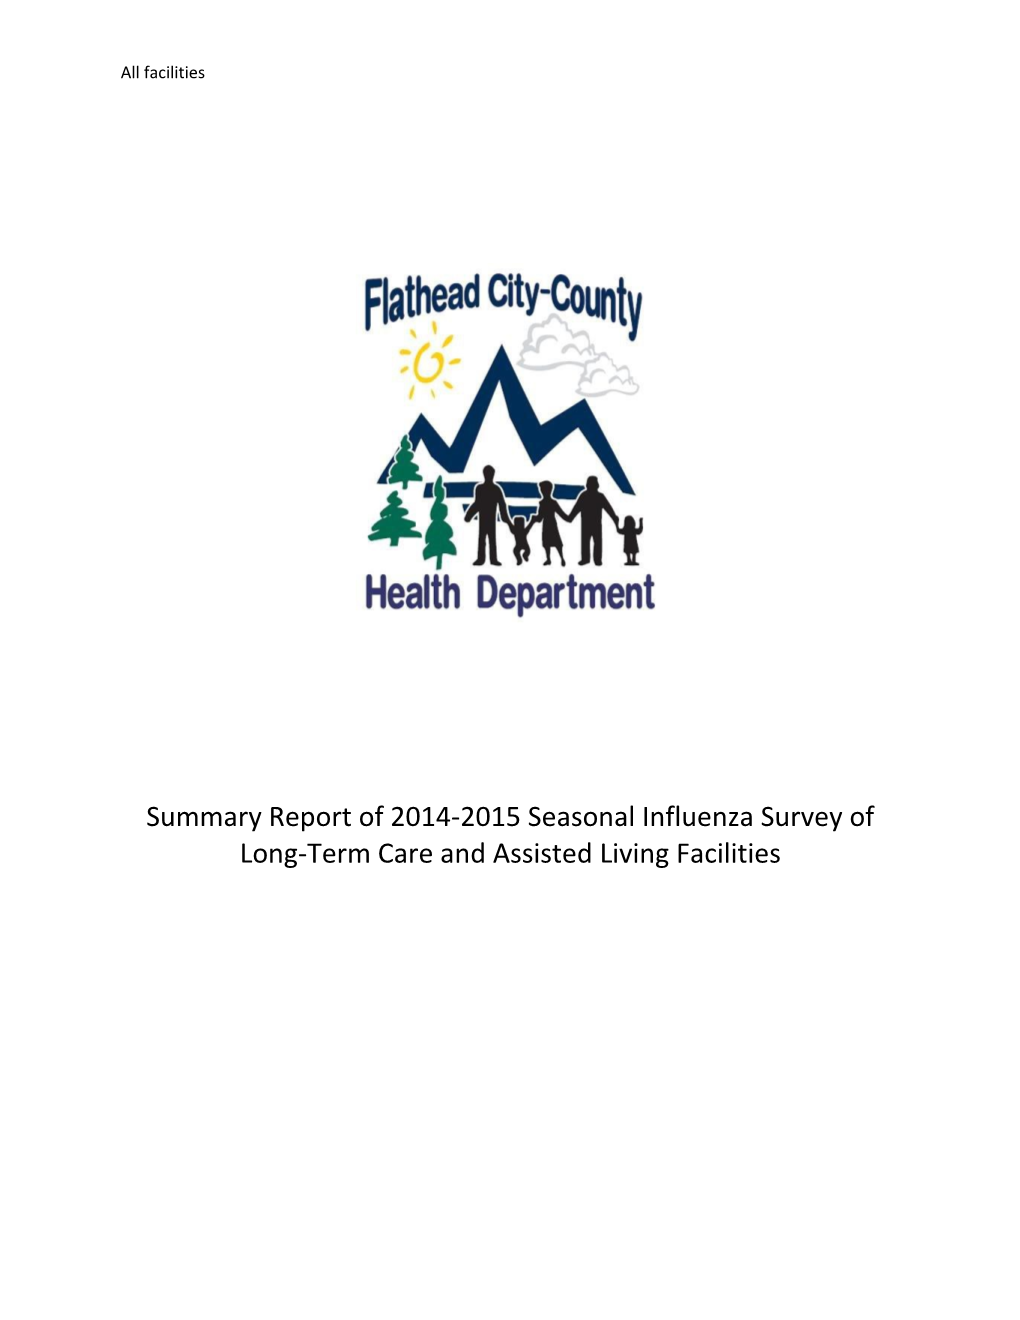 2014-2015 Seasonal Influenza Summary Report